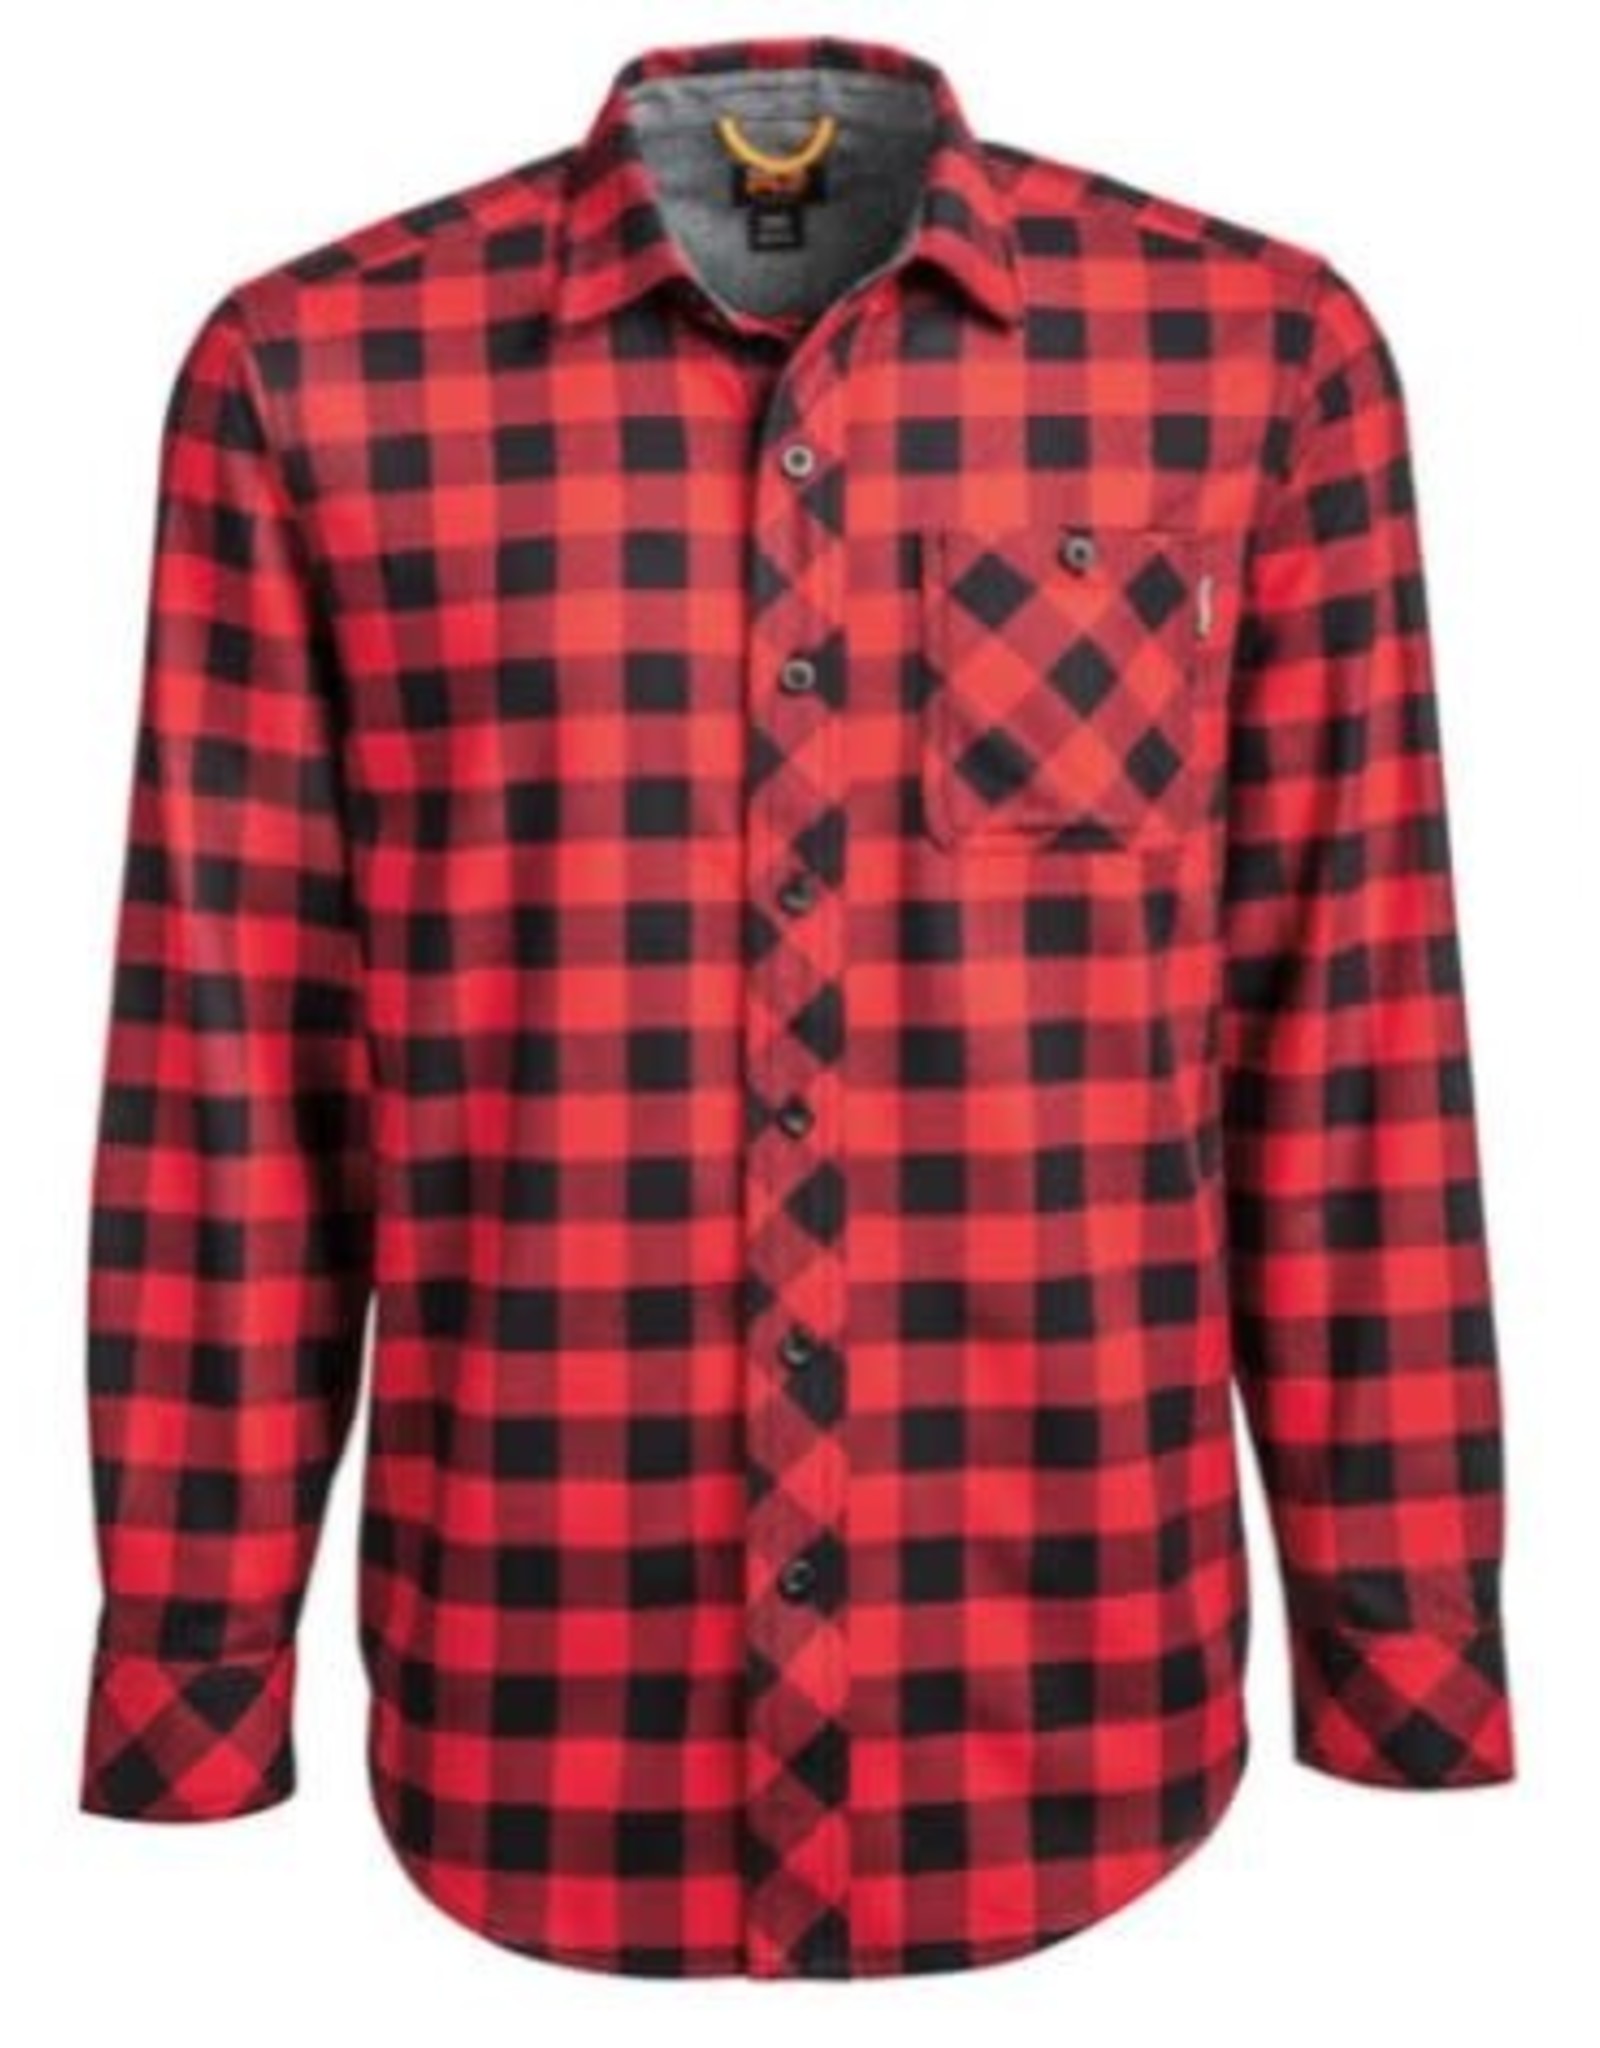 Timberland PRO Woodfort Flannel Shirt